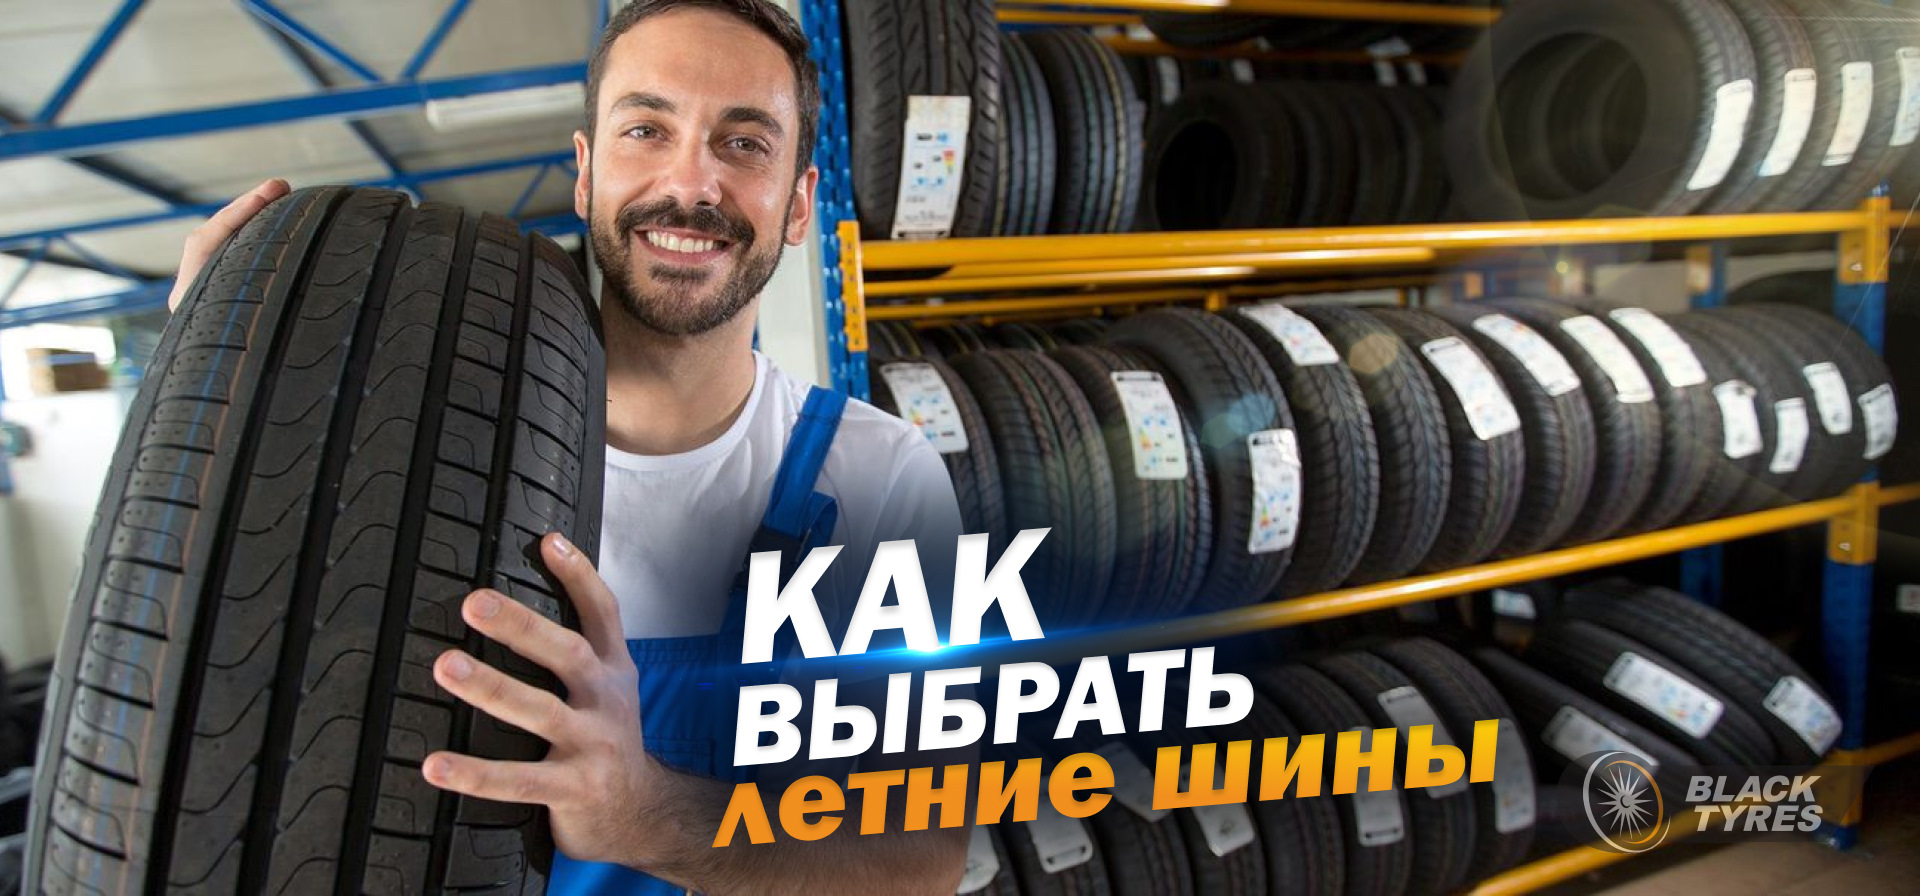 Blacktyres ru интернет магазин шин. Летние шины реклама. Шина. Шин. Блэк Тайерс.